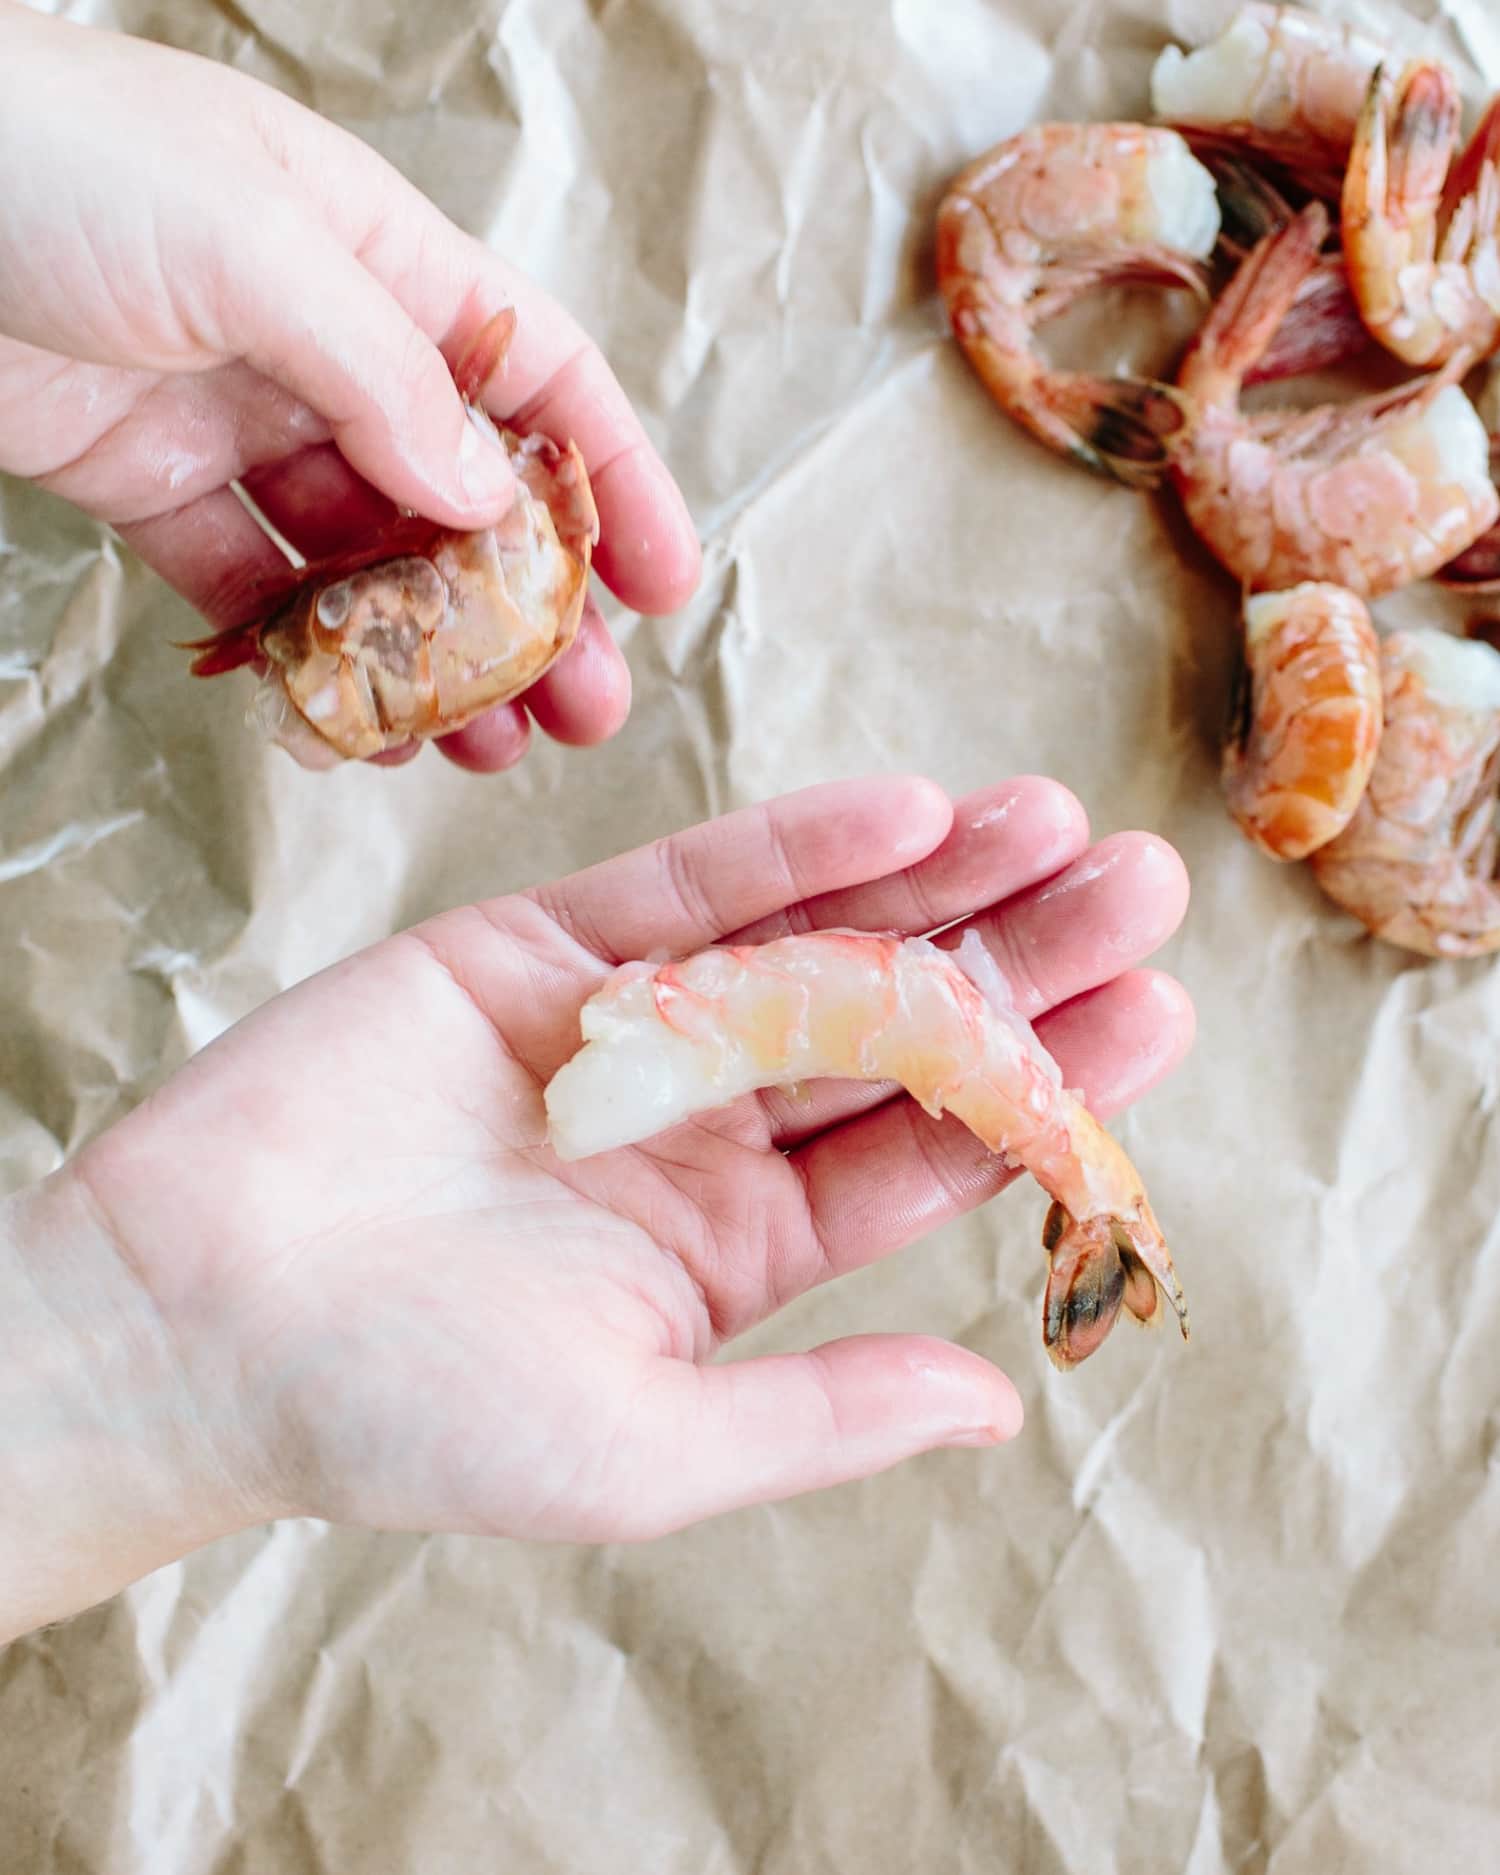 How To Peel & Devein Shrimp | Kitchn